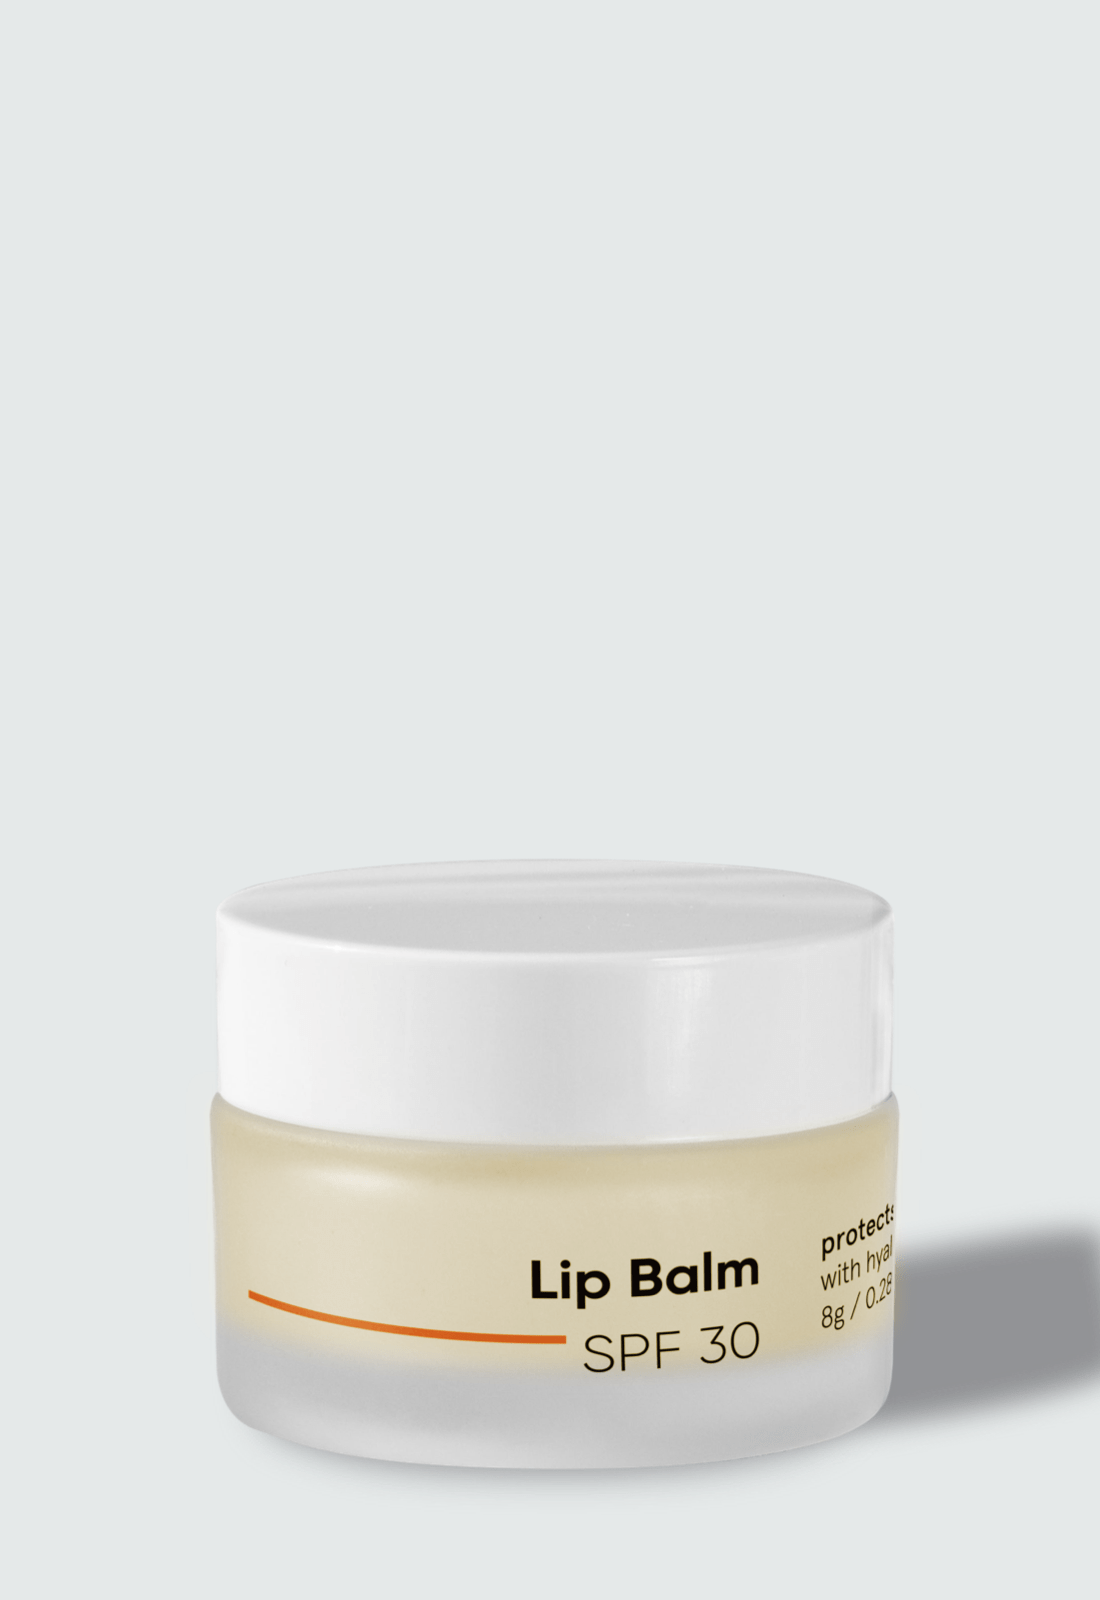 5 new lip balms for Spring 2019